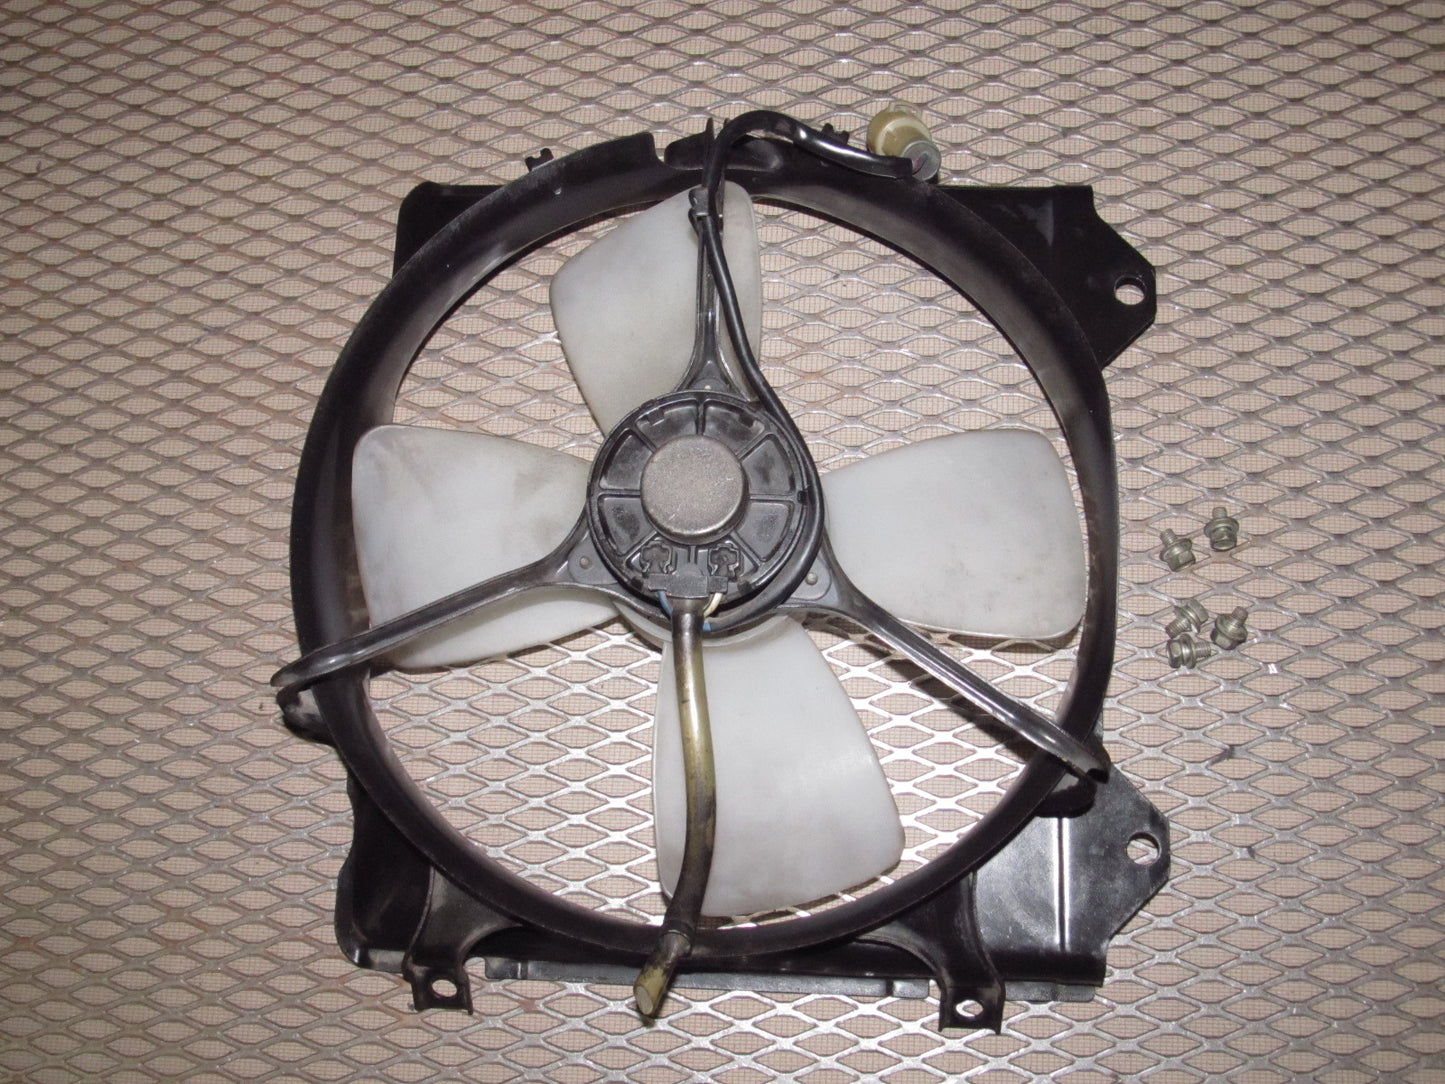 85 86 Toyota MR2 OEM A/C Condenser & Radiator Fan - Left